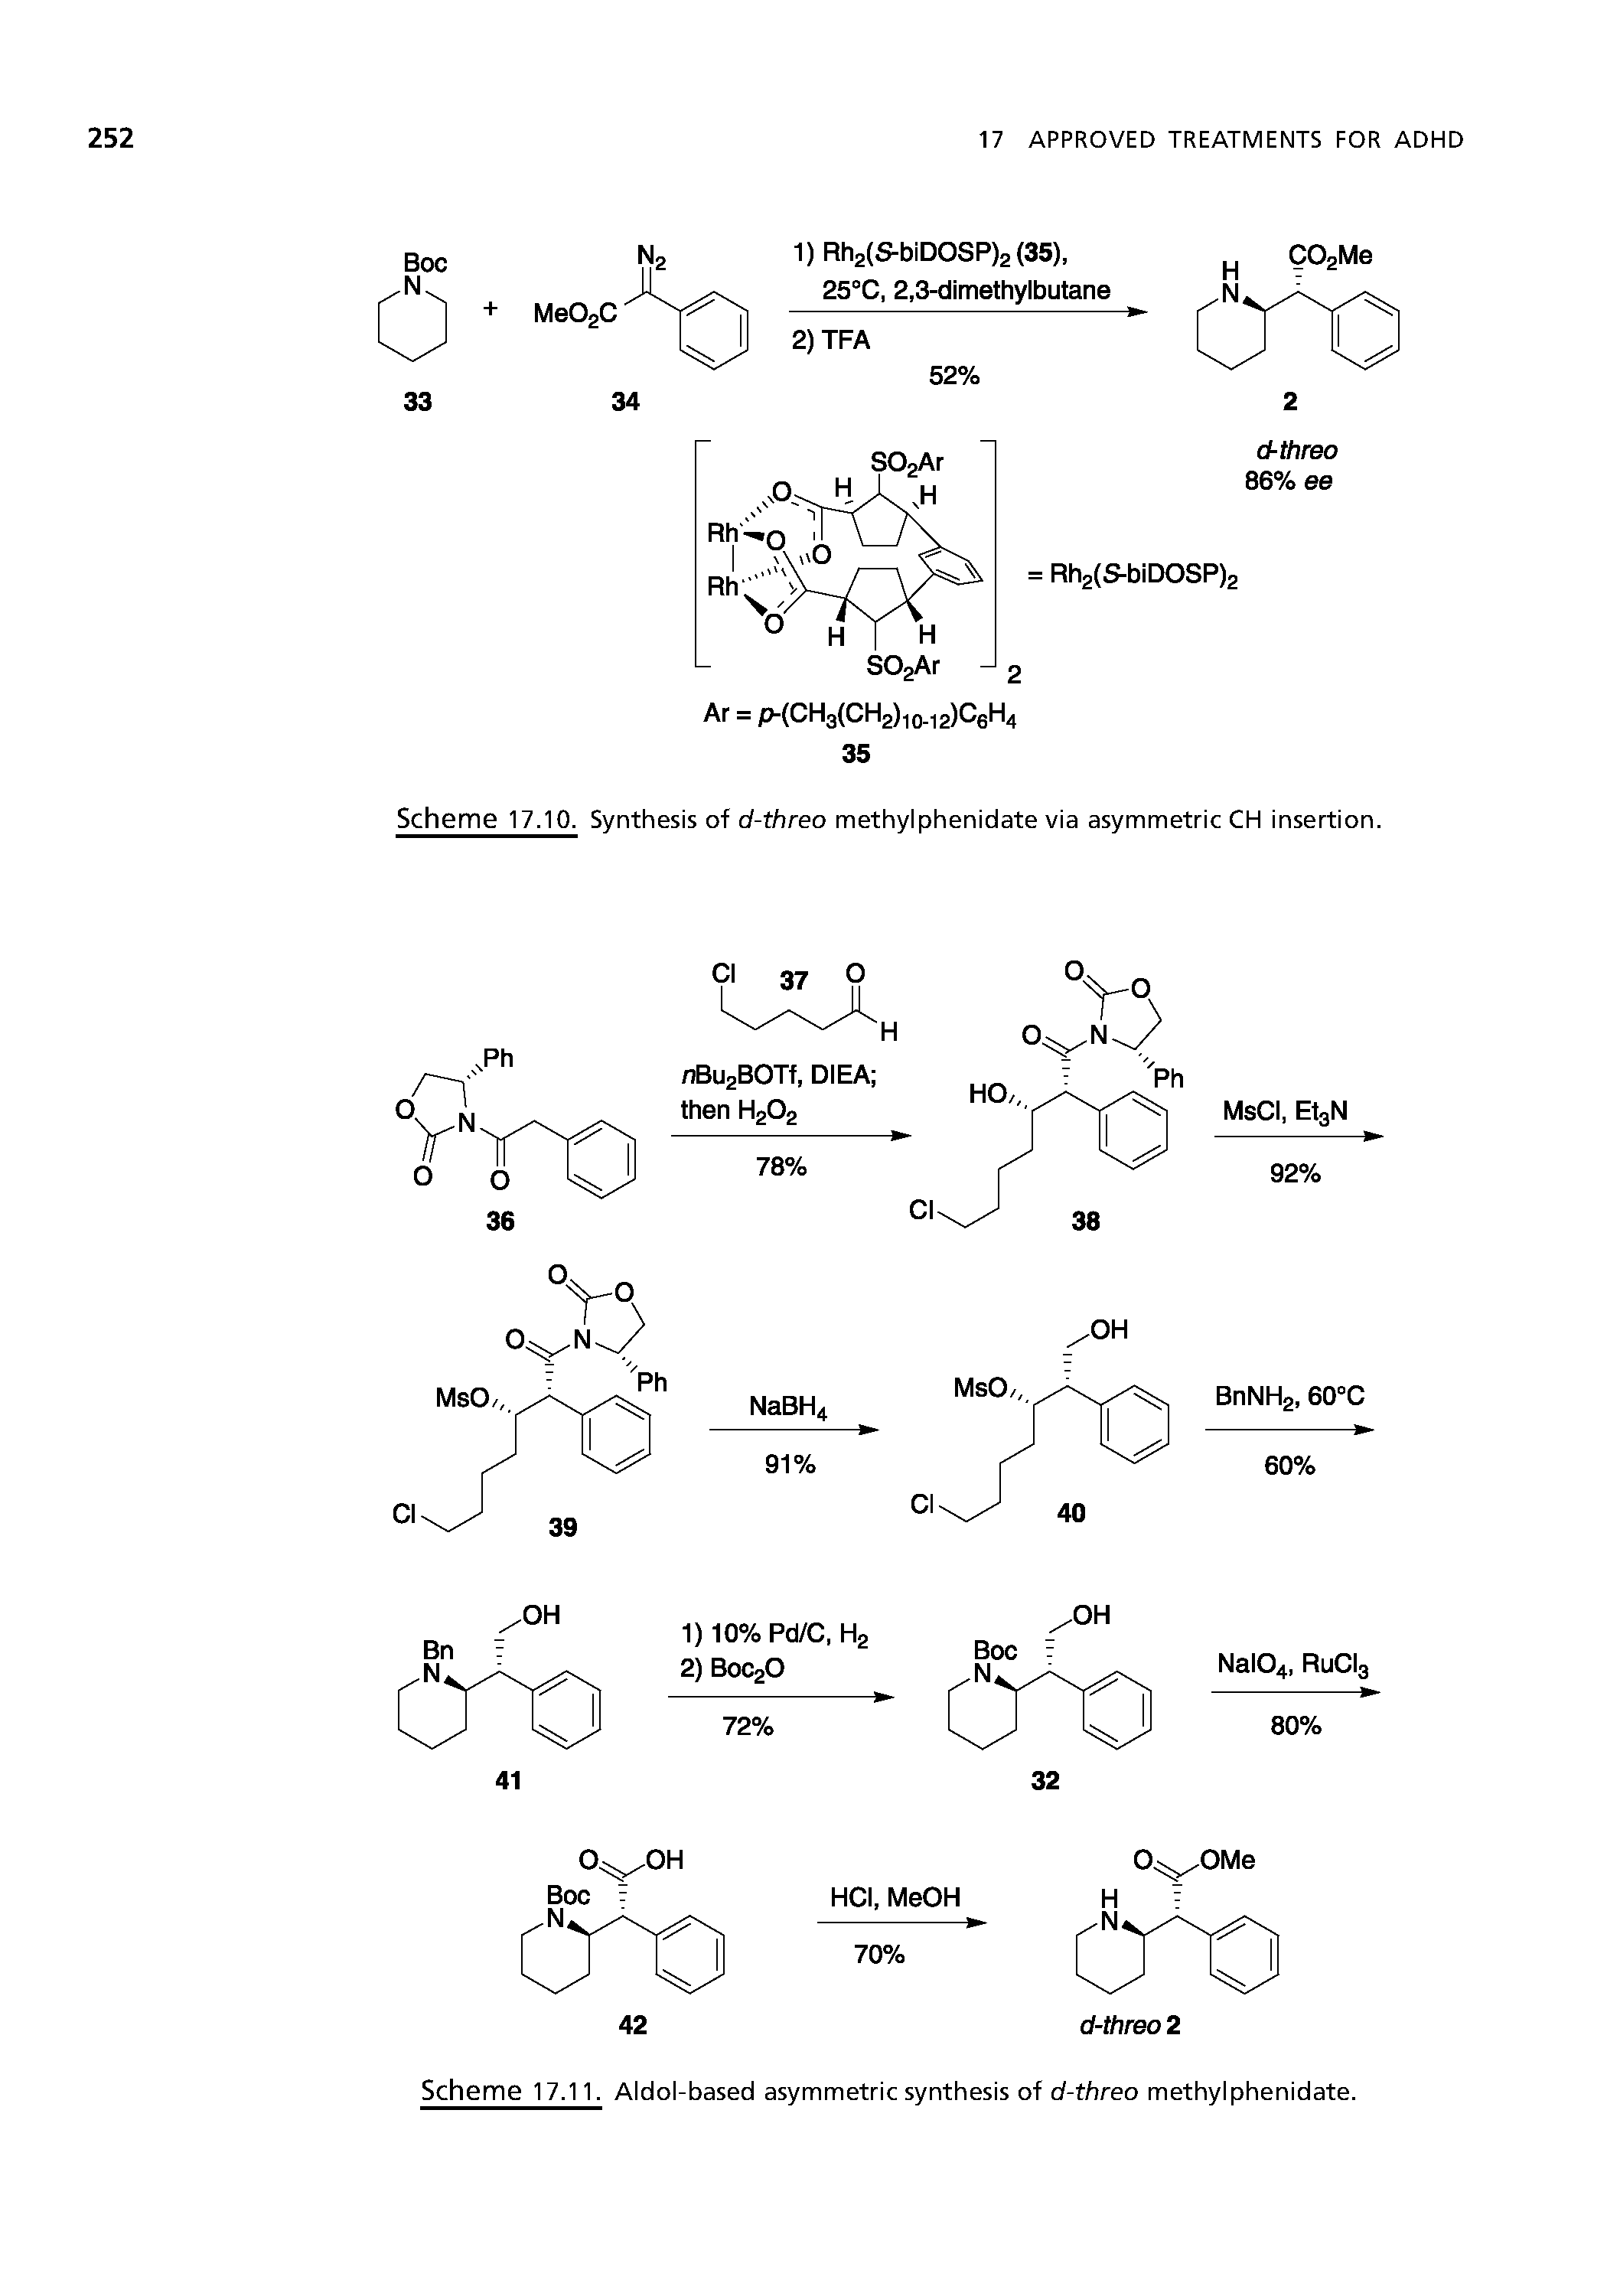 Scheme 17.10. Synthesis of d-threo methylphenidate via asymmetric CH insertion.